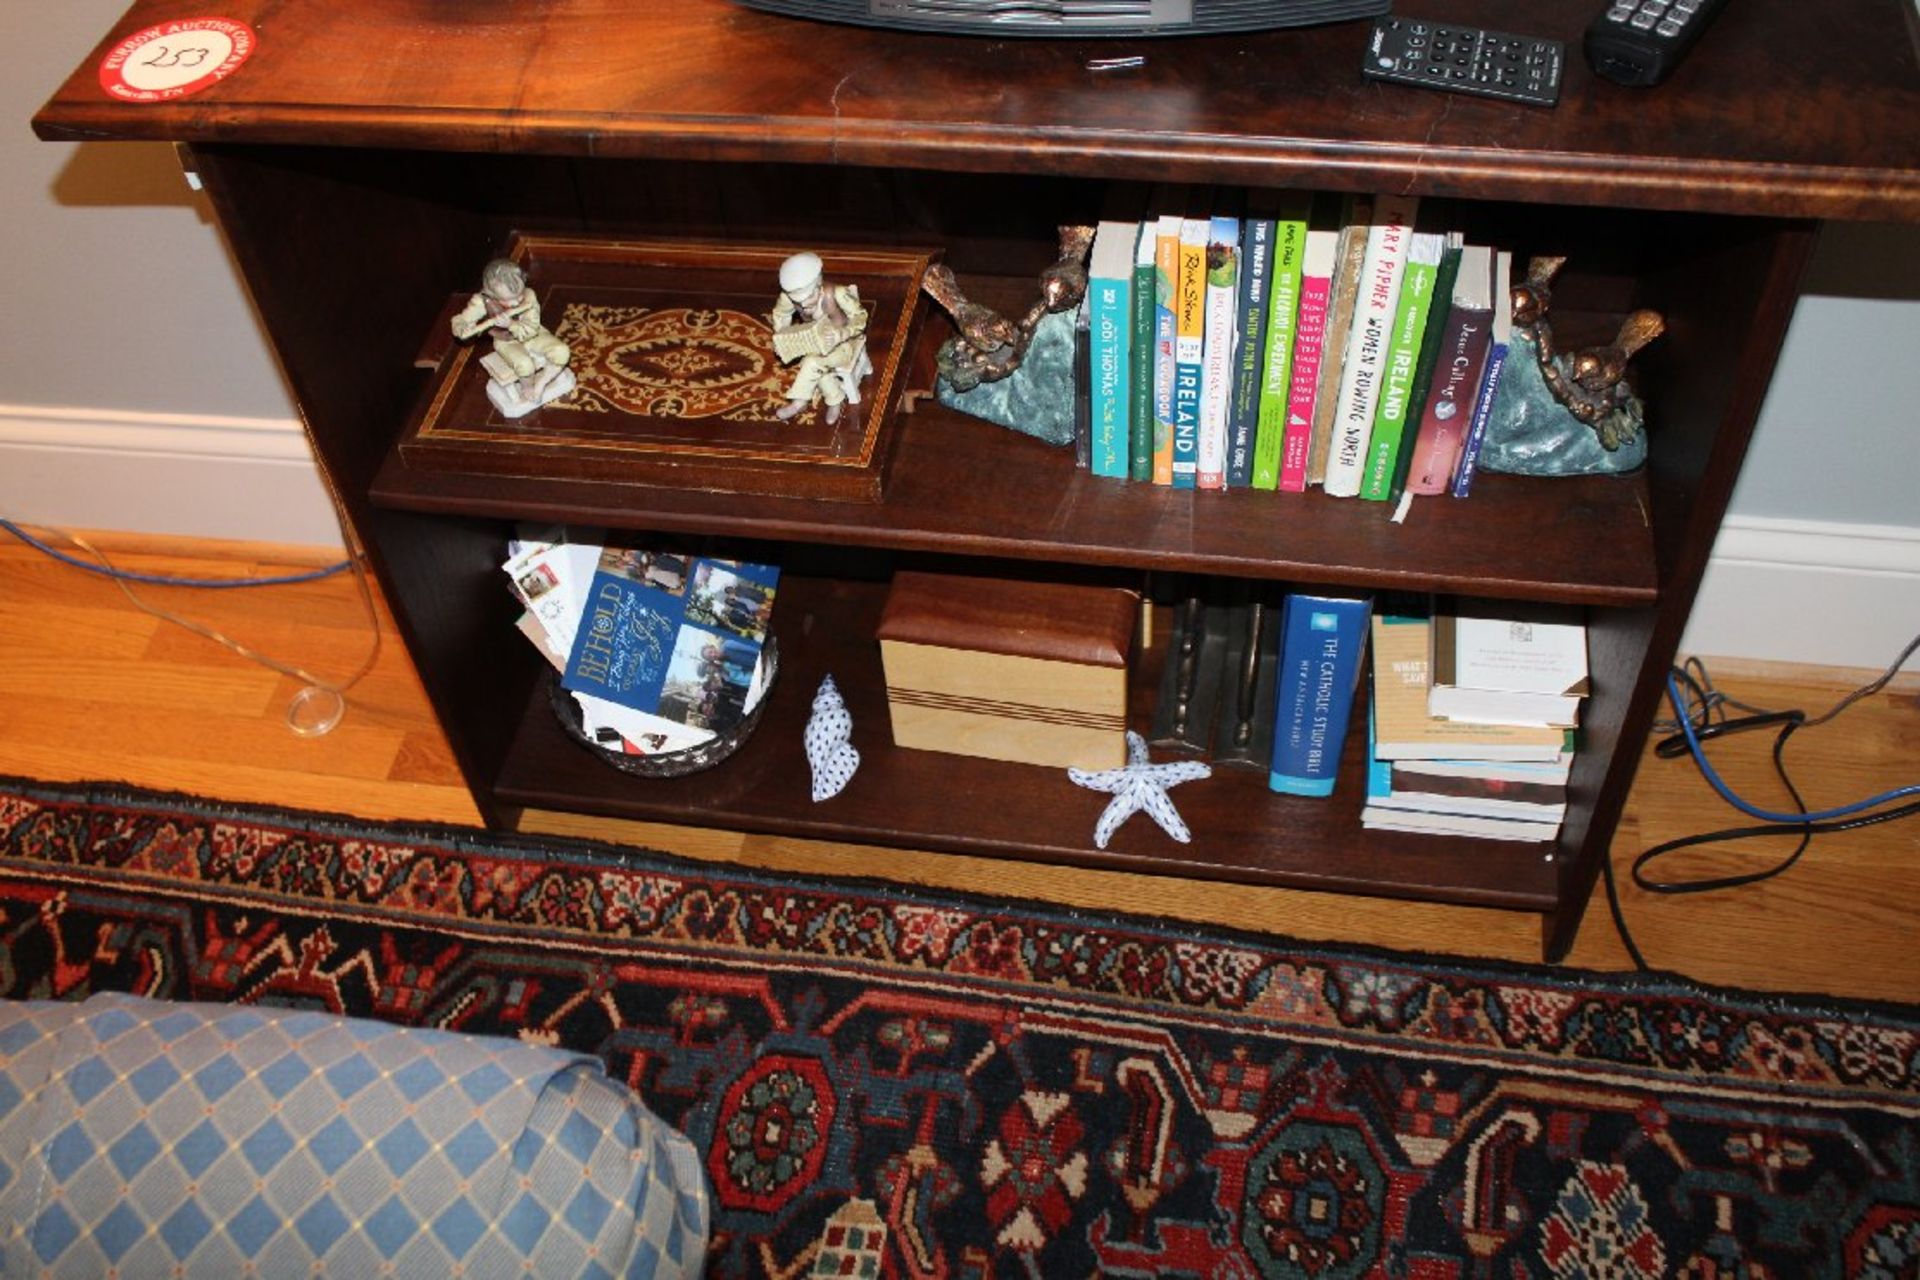 Wooden 2 Shelve Bookshelf plus Contents (Various Novels, Figurines, Bookends, etc.), 40" w x 14" d x